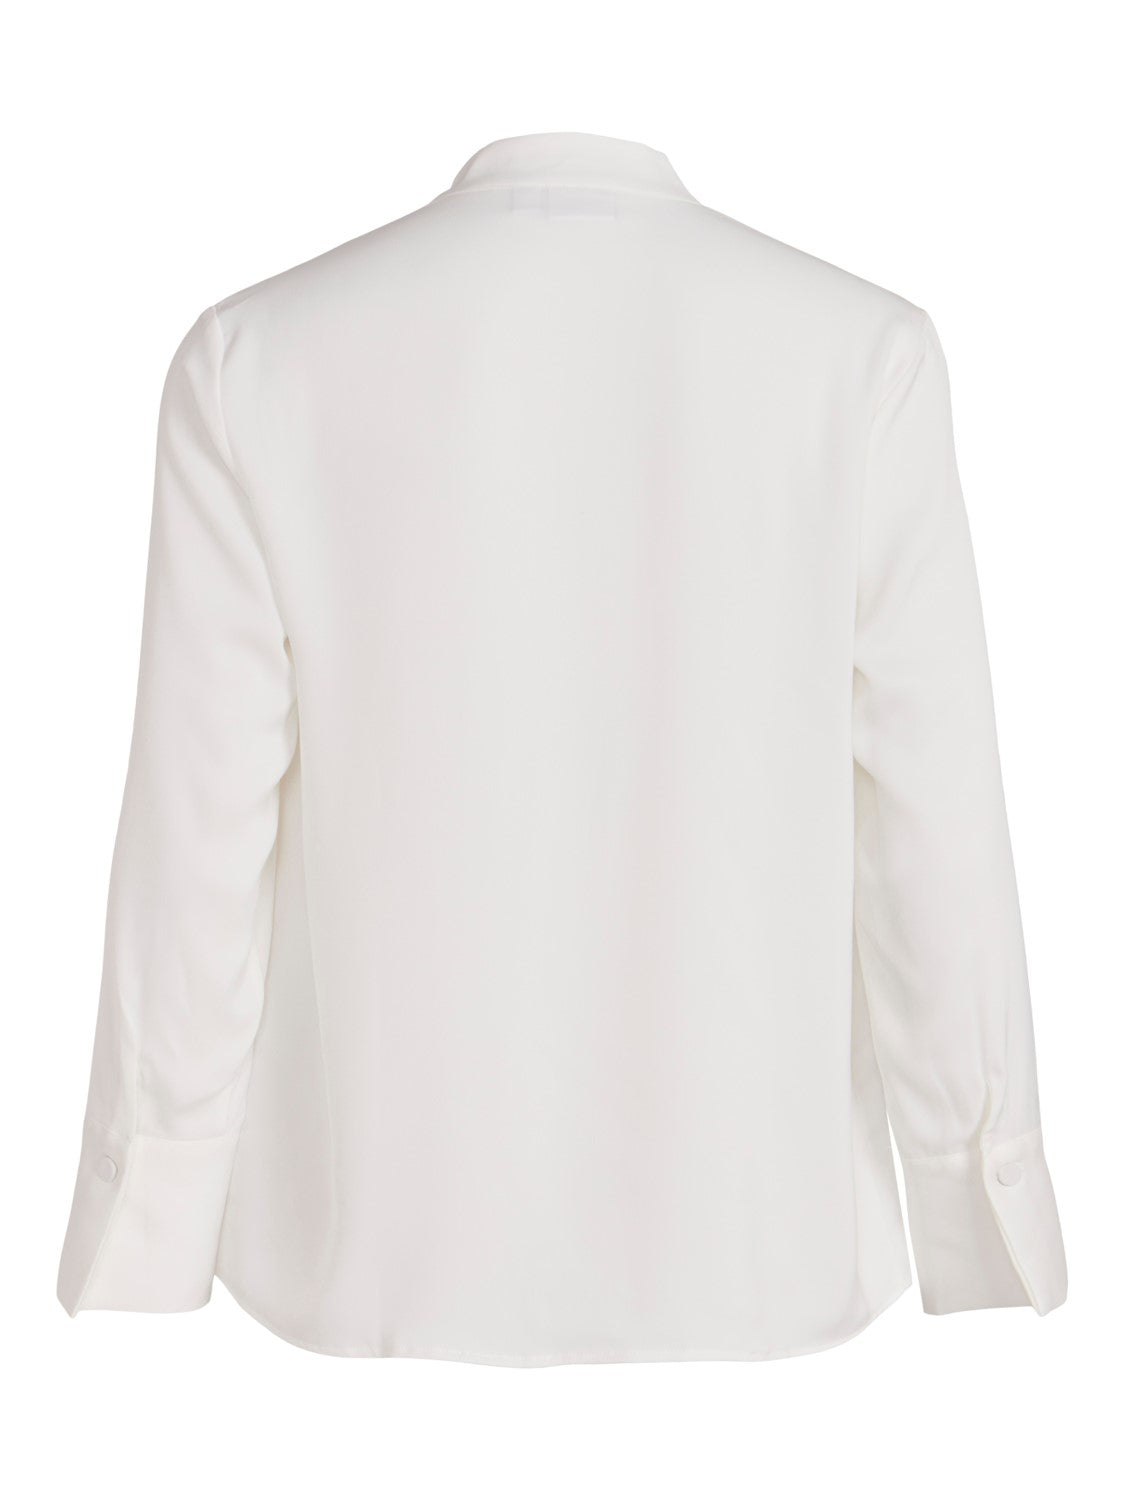 Dililah Shirt (Off White)